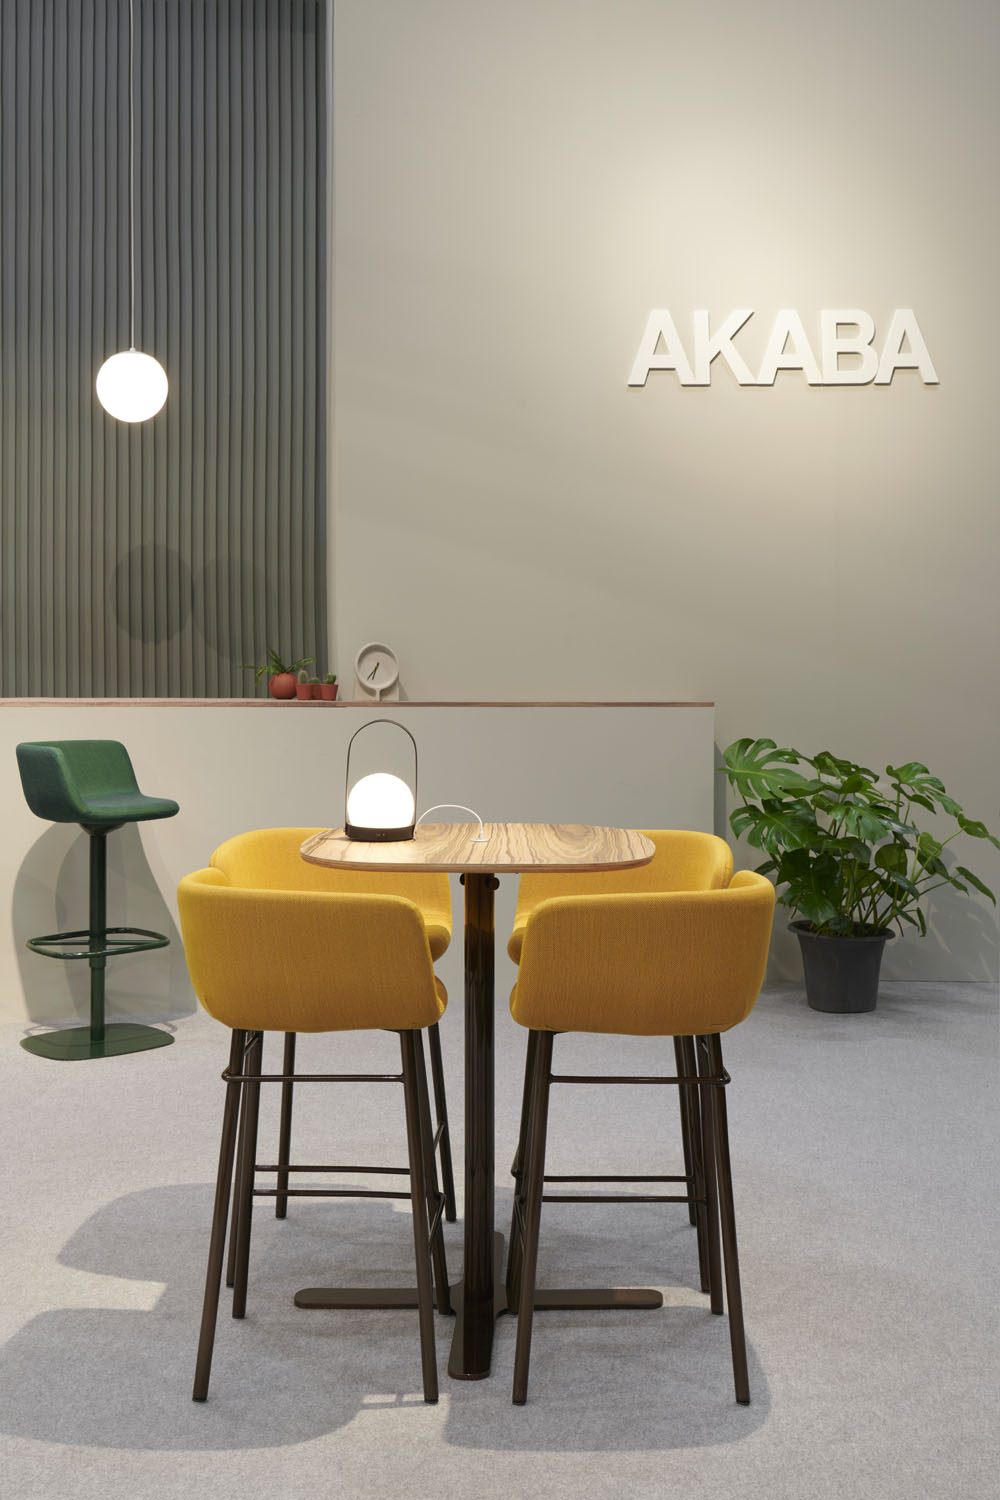 Stand Design For Akaba Milan Furniture Fair 2019